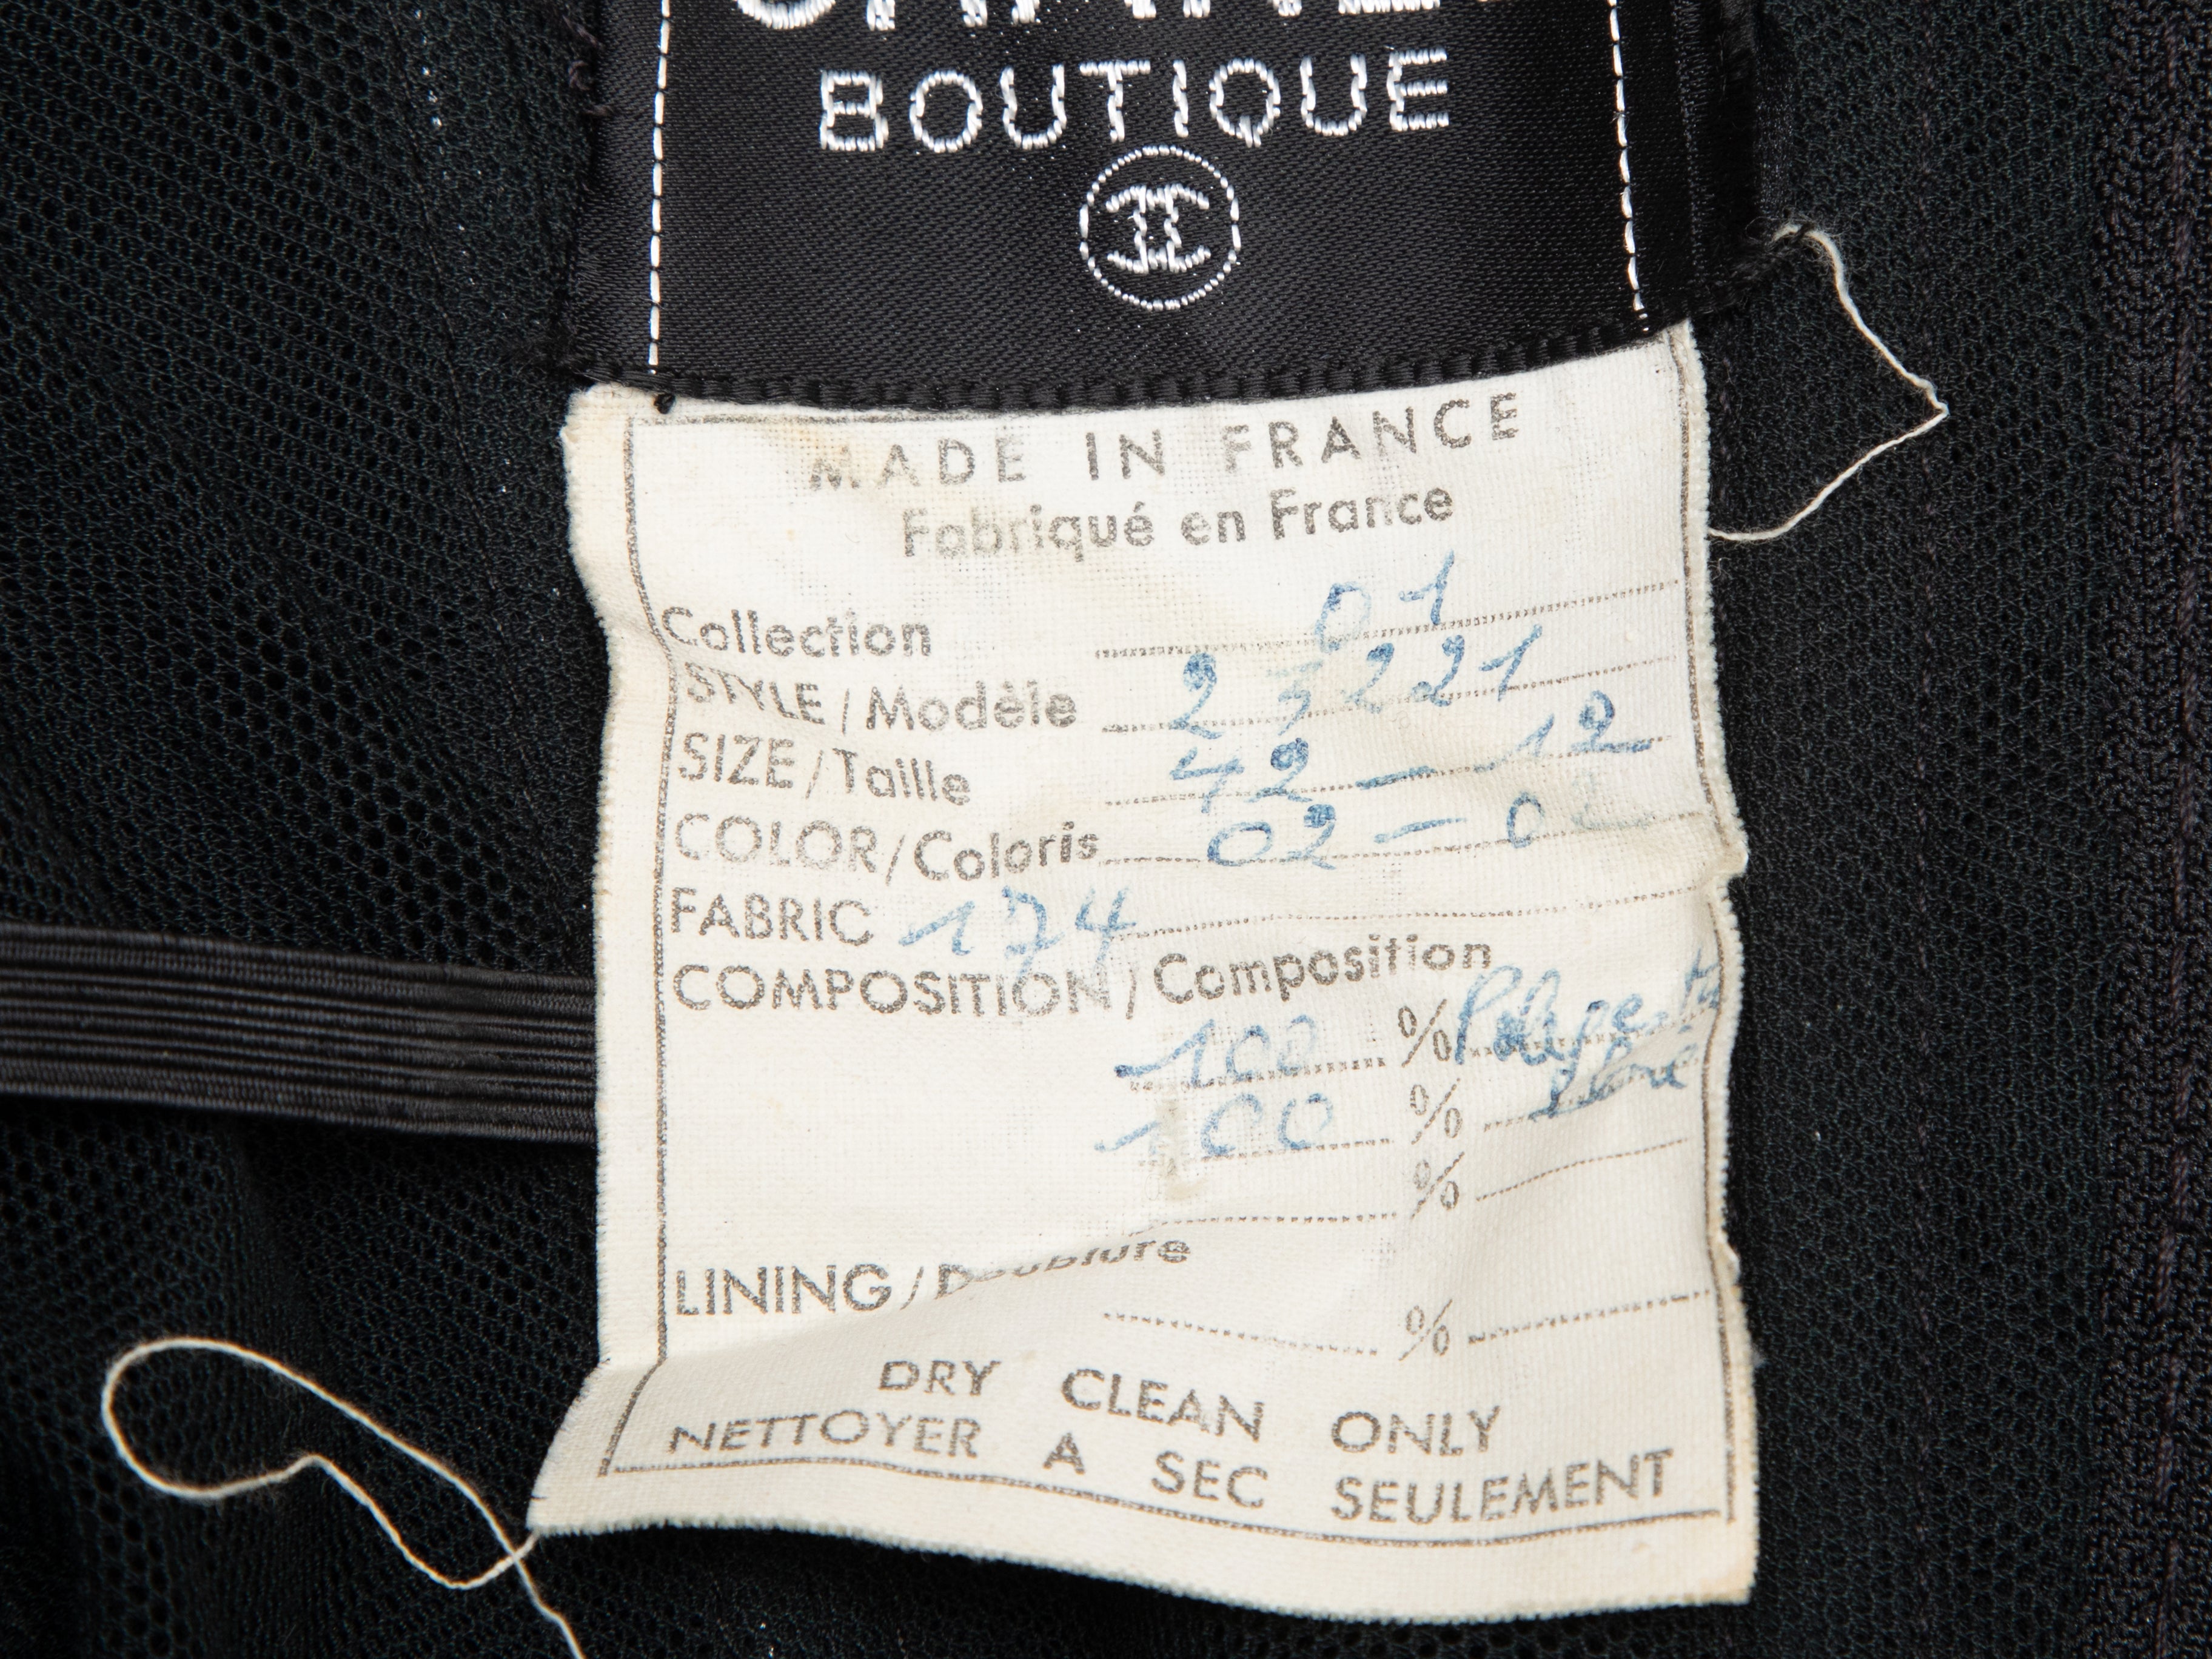 Vintage Black Chanel Boutique Mesh Overlay Strapless Ribbon Dress